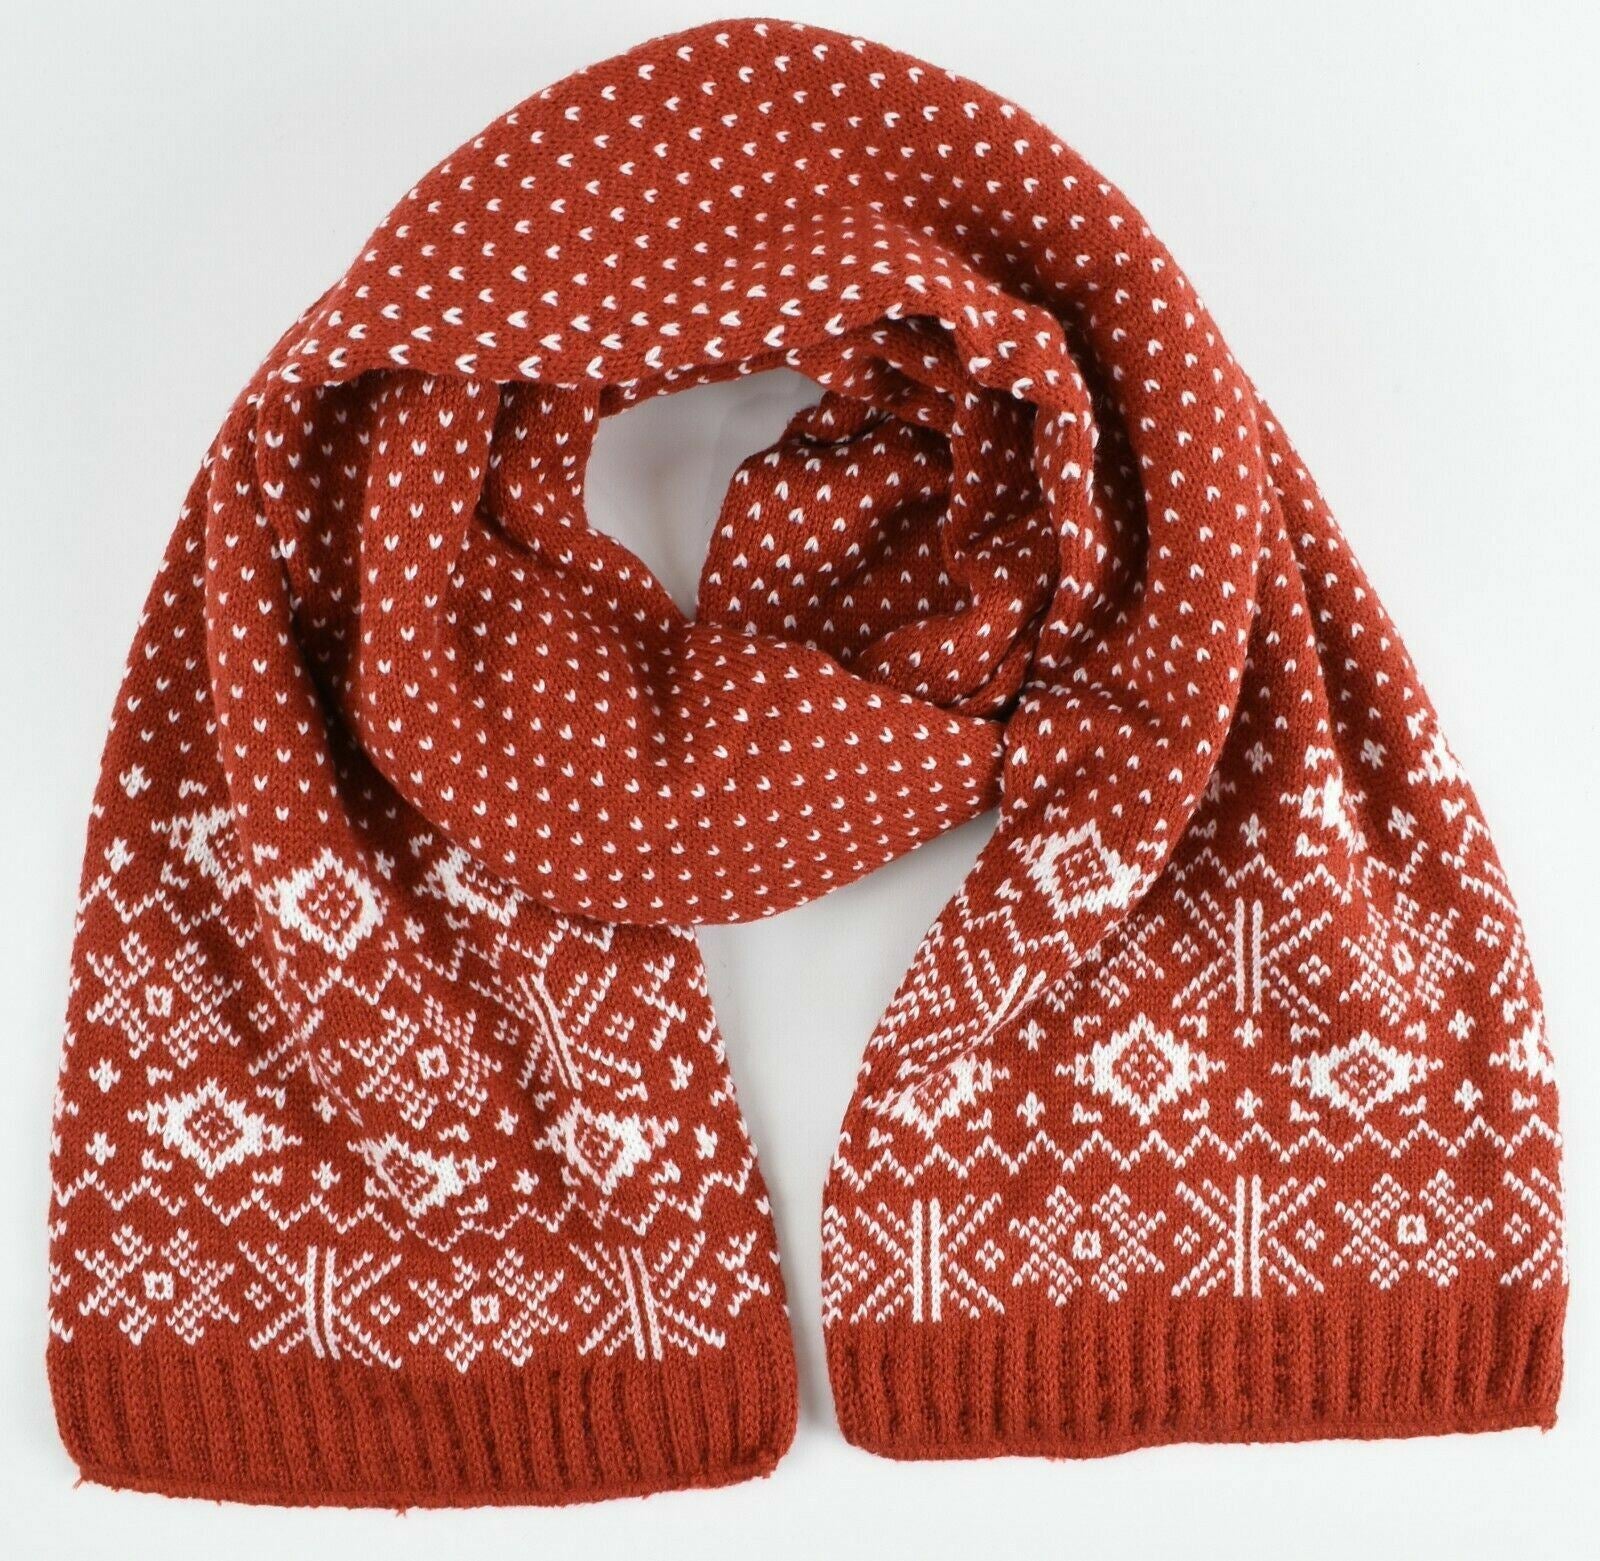 SOULCAL & CO Red / Birdseye Print Knitted Winter Scarf, Men's /Women's